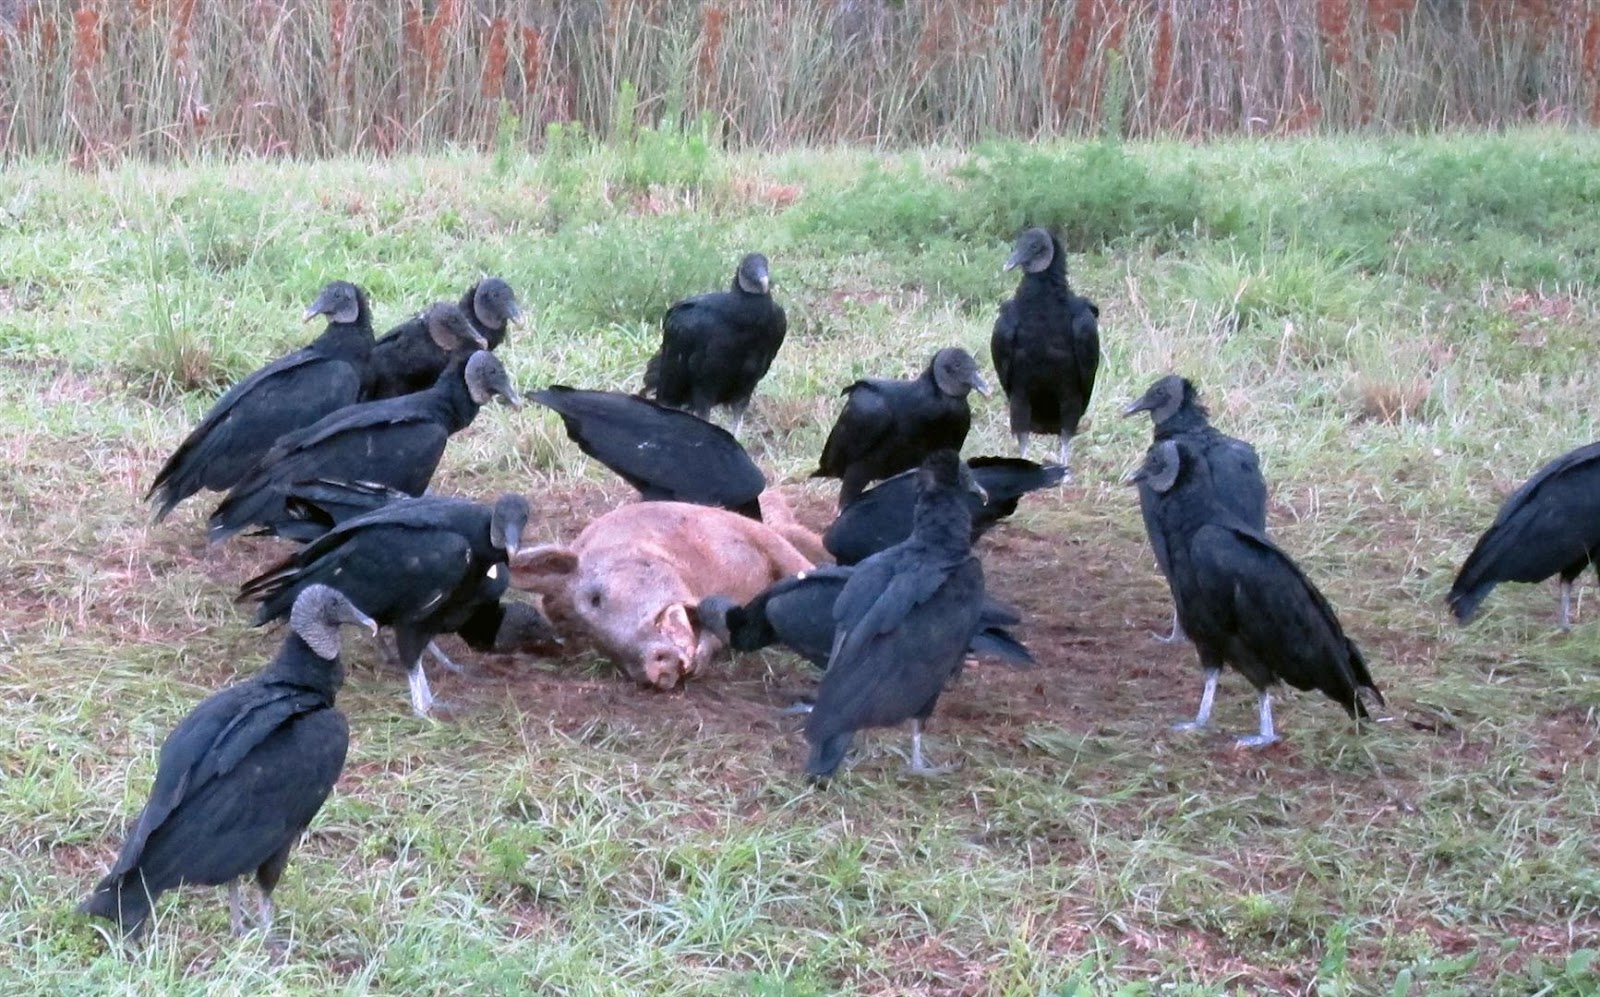 vultures+eating+carcas+pig+florida+sanctuary+nasa+(Large).jpg